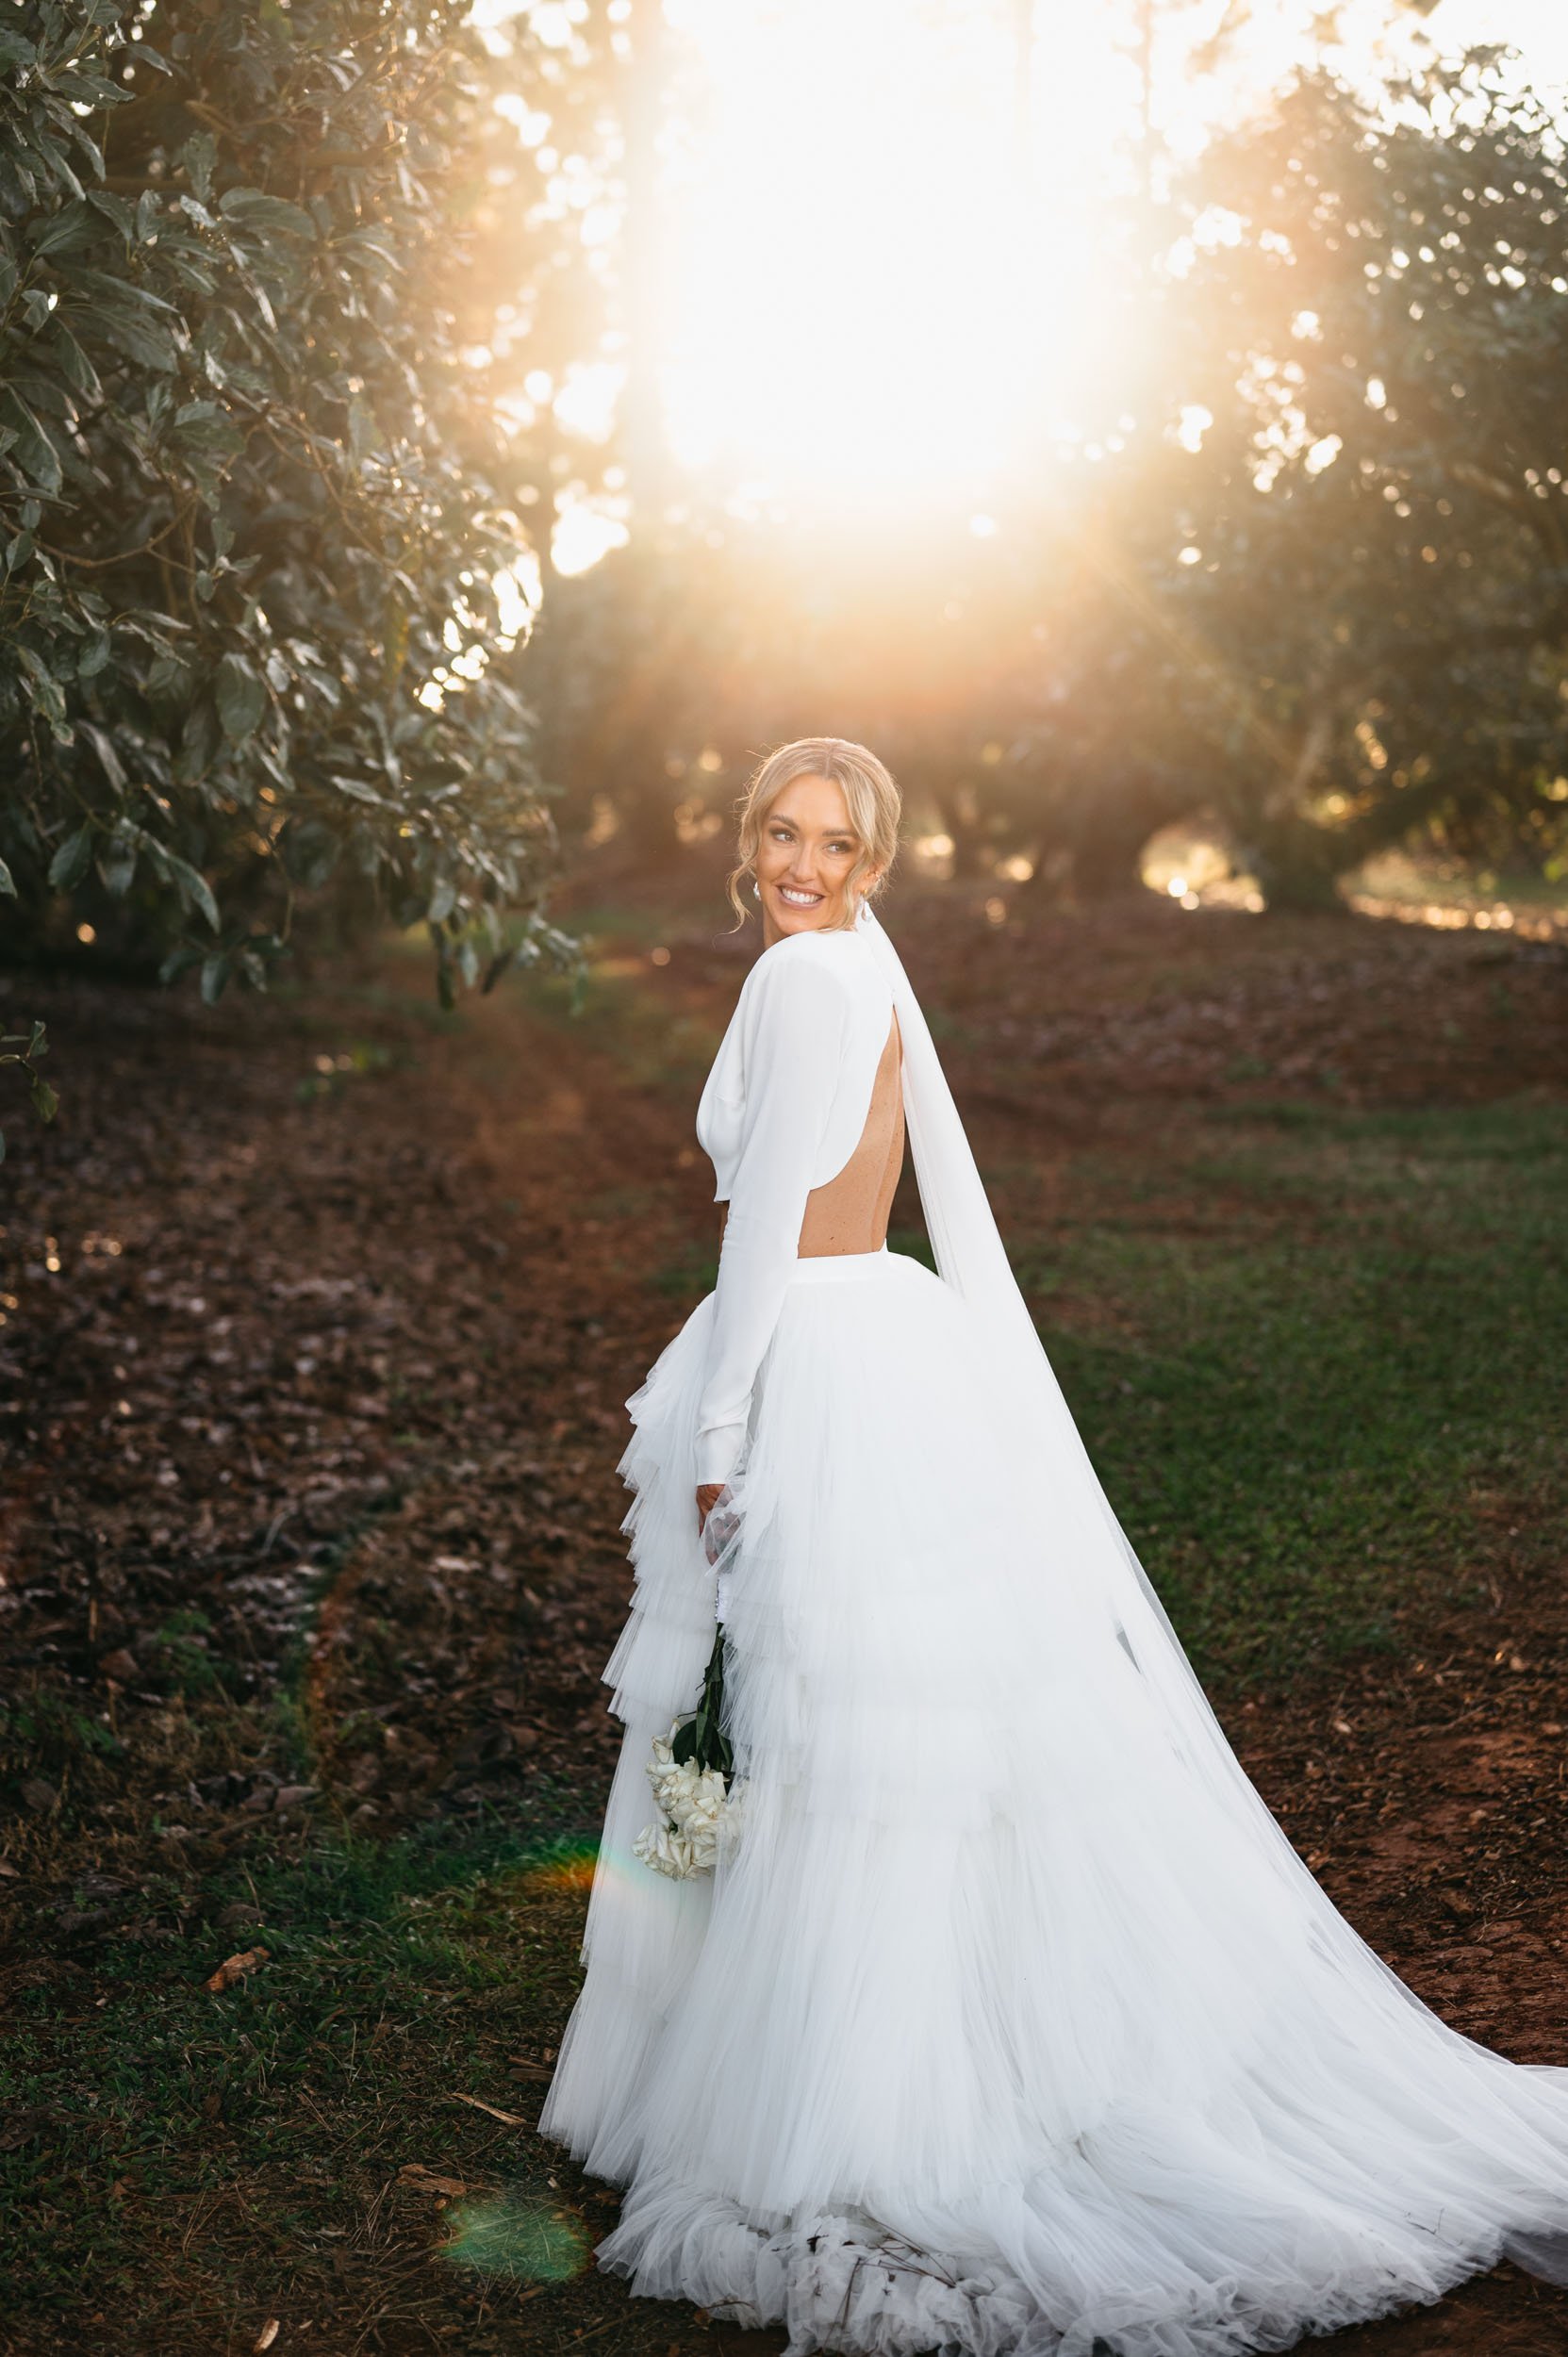 The Raw Photographer - Cairns Wedding Photographer - Mareeba Tablelands - Queensland photography - Kyha dress - luxury-47.jpg